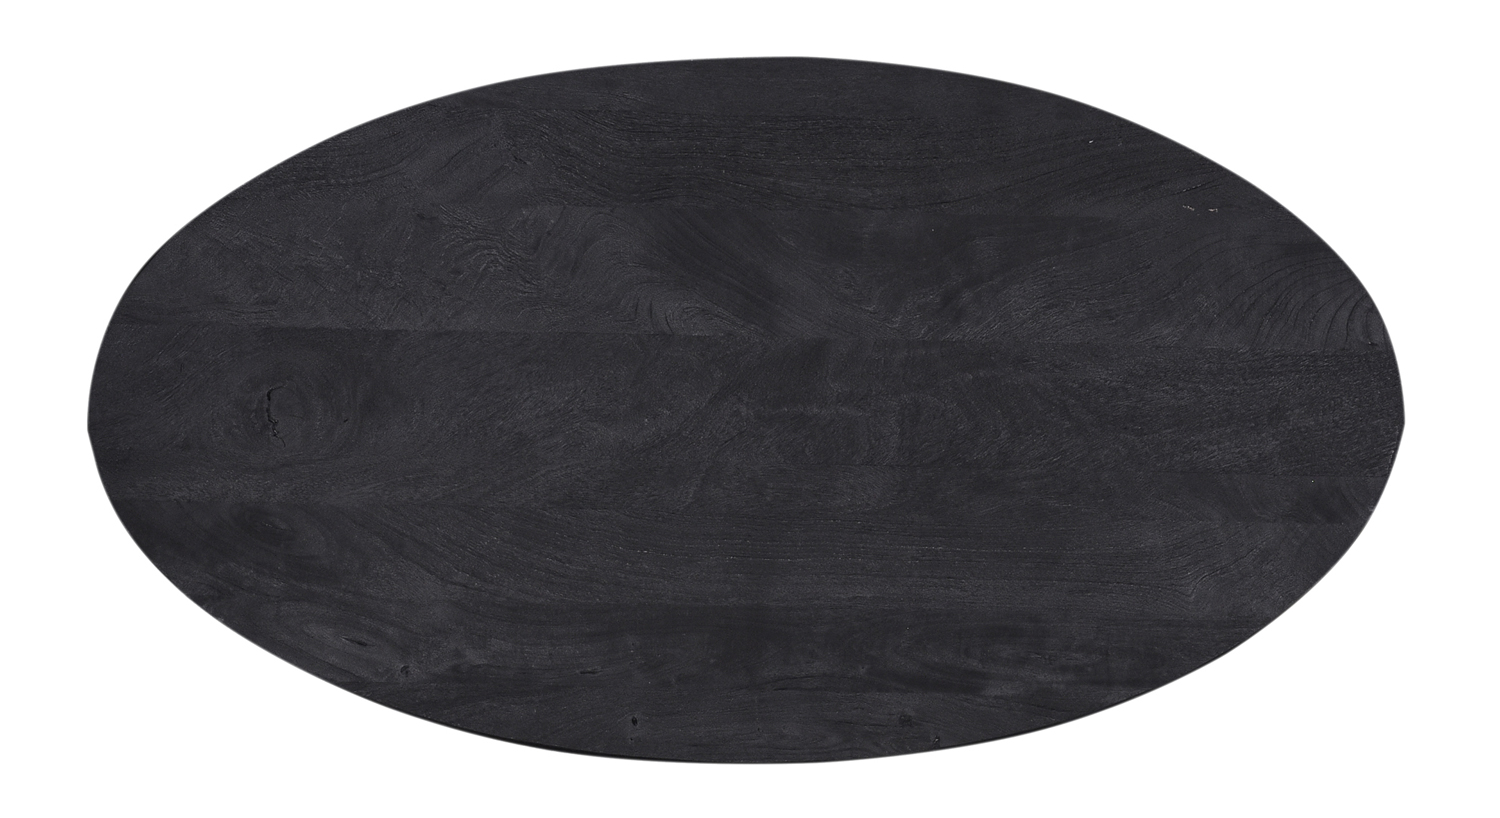 Couchtisch MADISON oval 20 x 20 cm Mangoholz schwarz